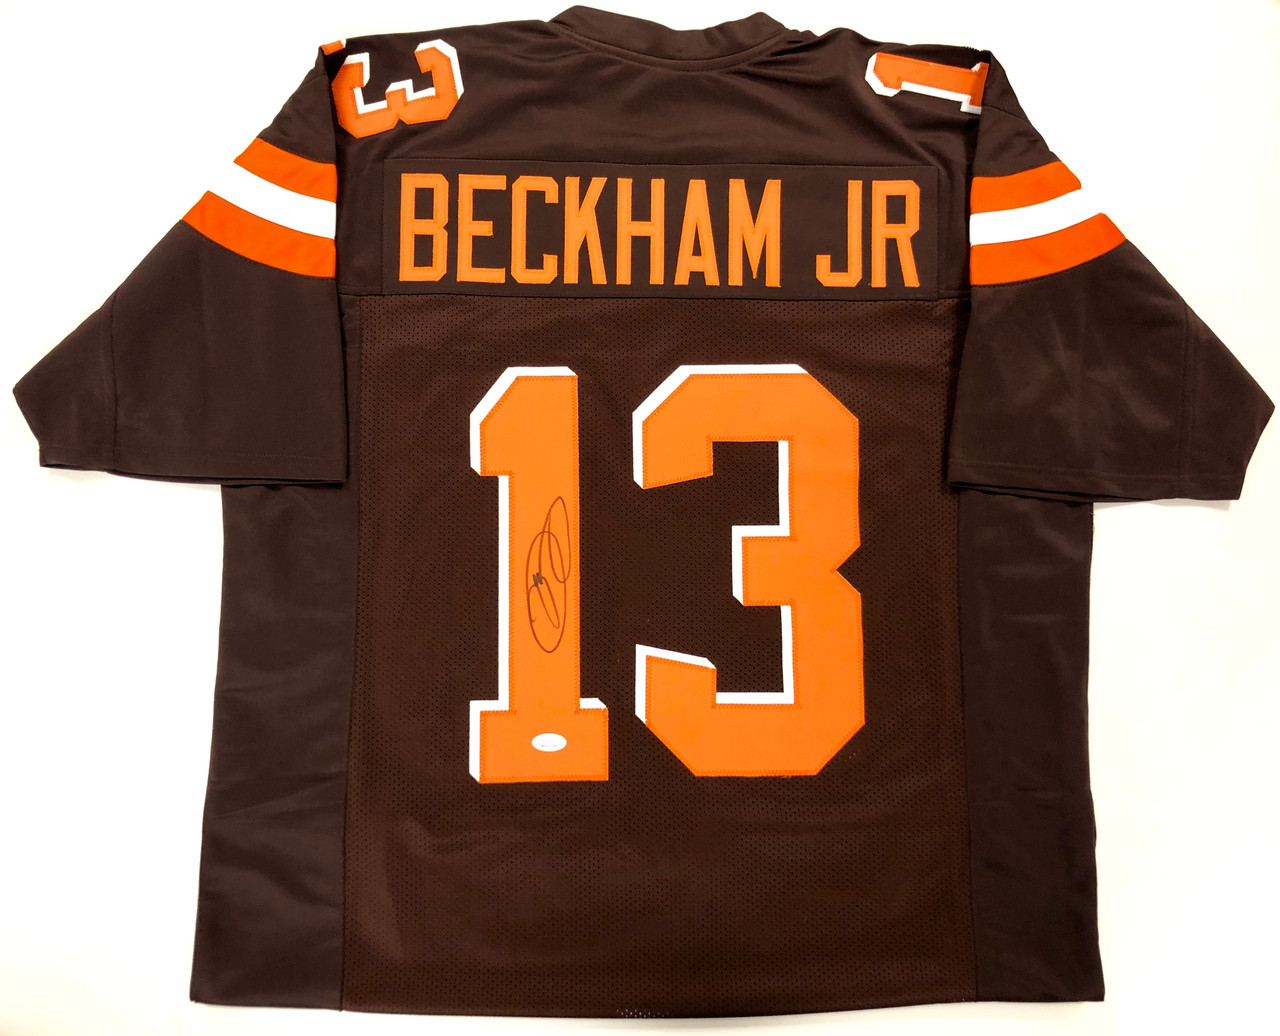 authentic beckham jr jersey